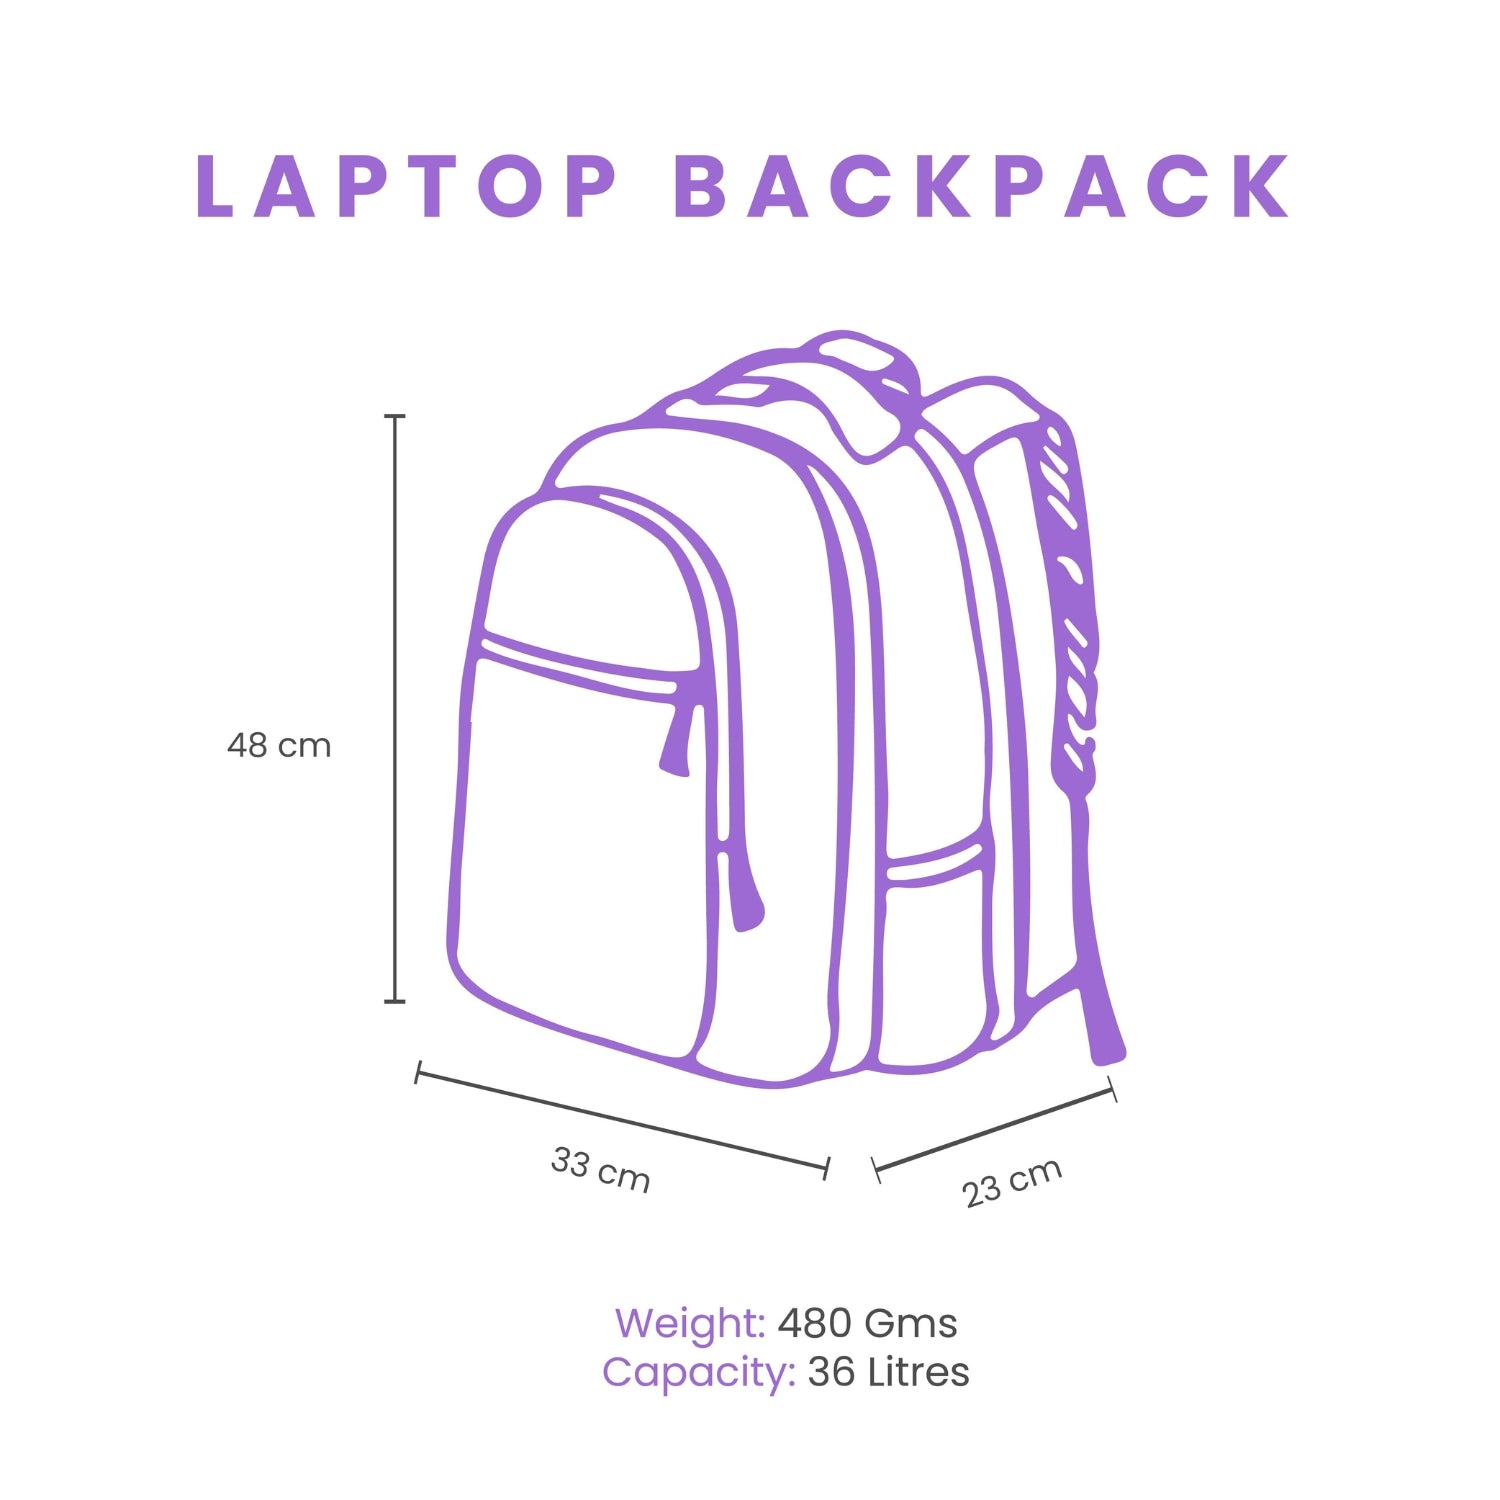 Genie Zim Zam 36L Black Laptop Backpack With Laptop Sleeve